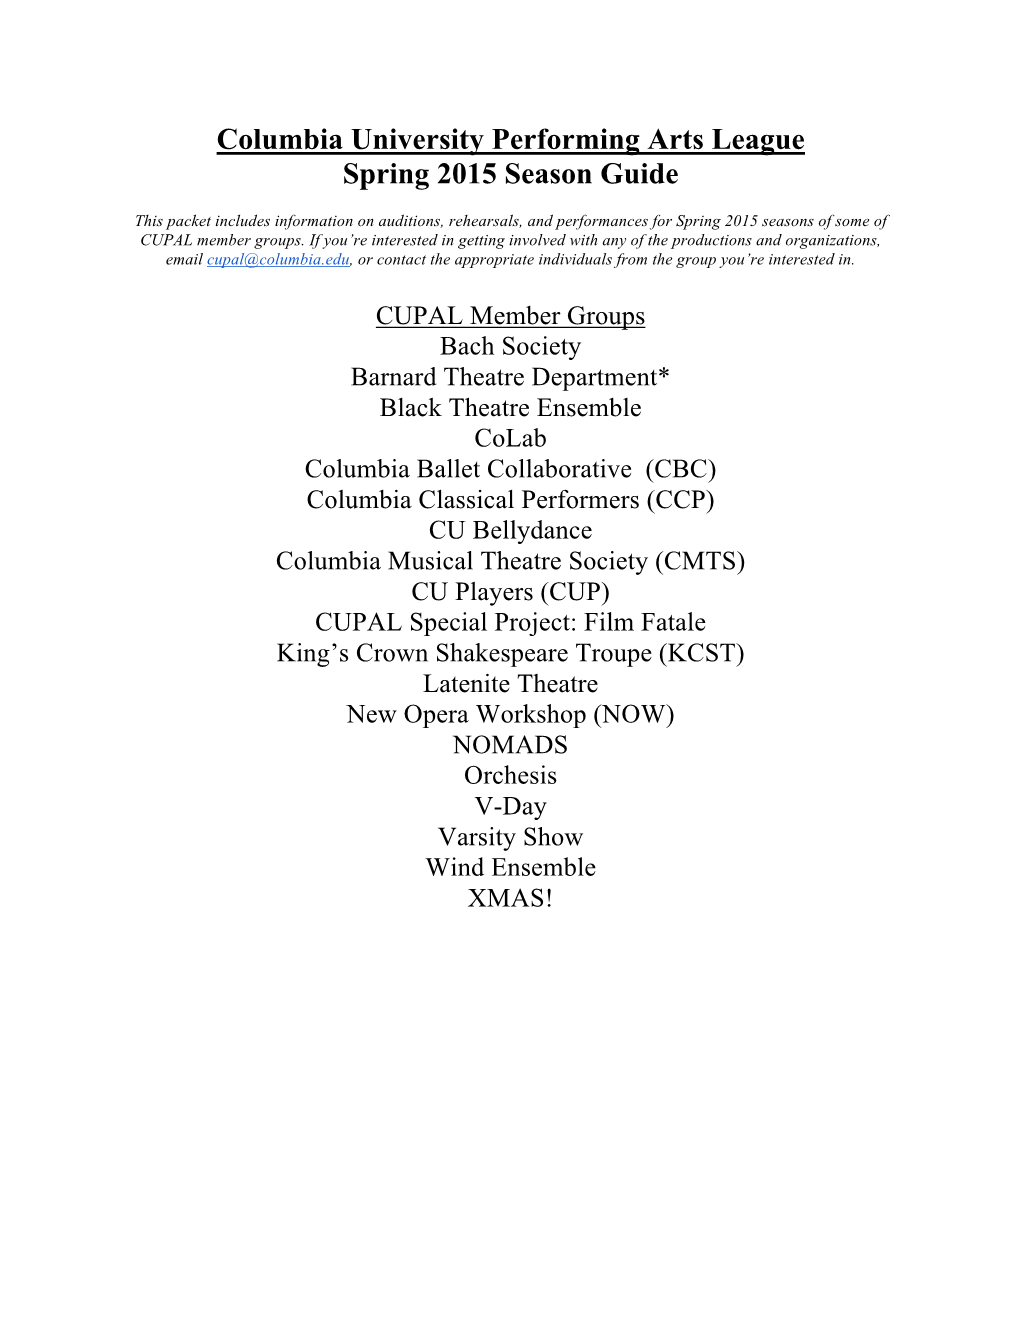 Columbia University Performing Arts League Spring 2015 Season Guide